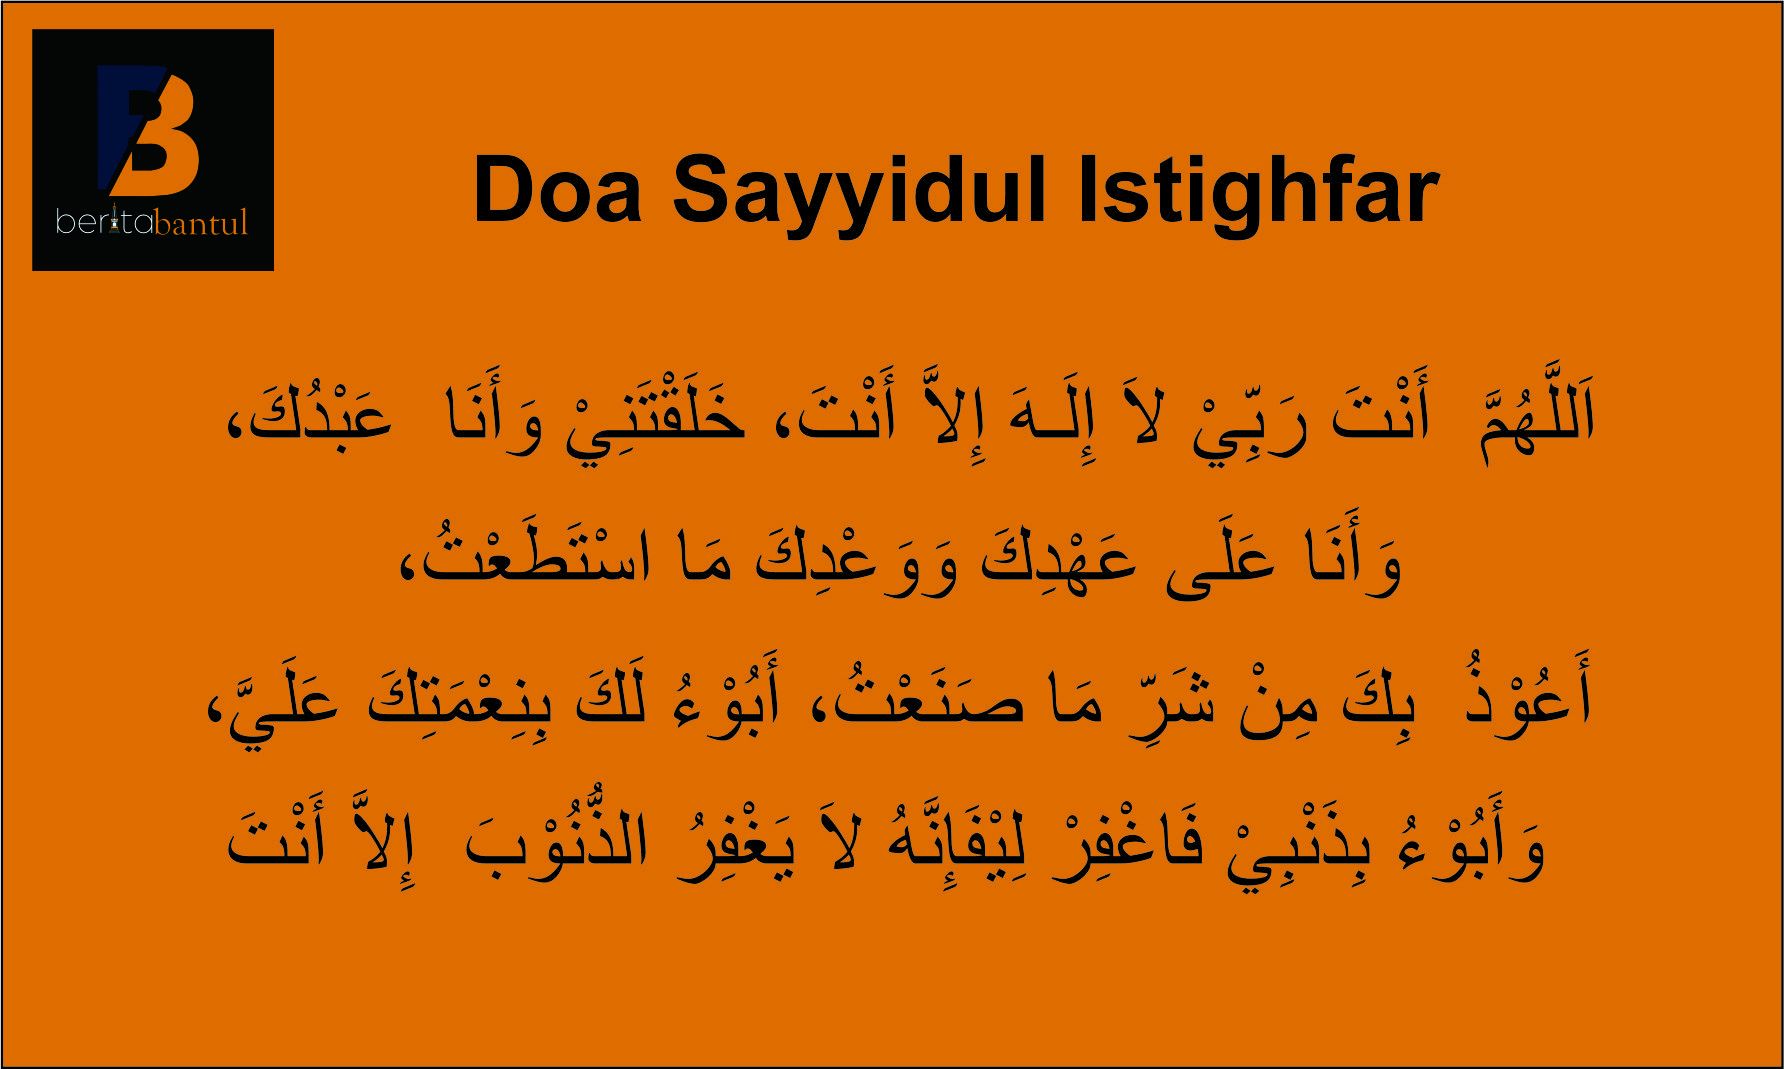 Doa Sayyidul Istighfar.